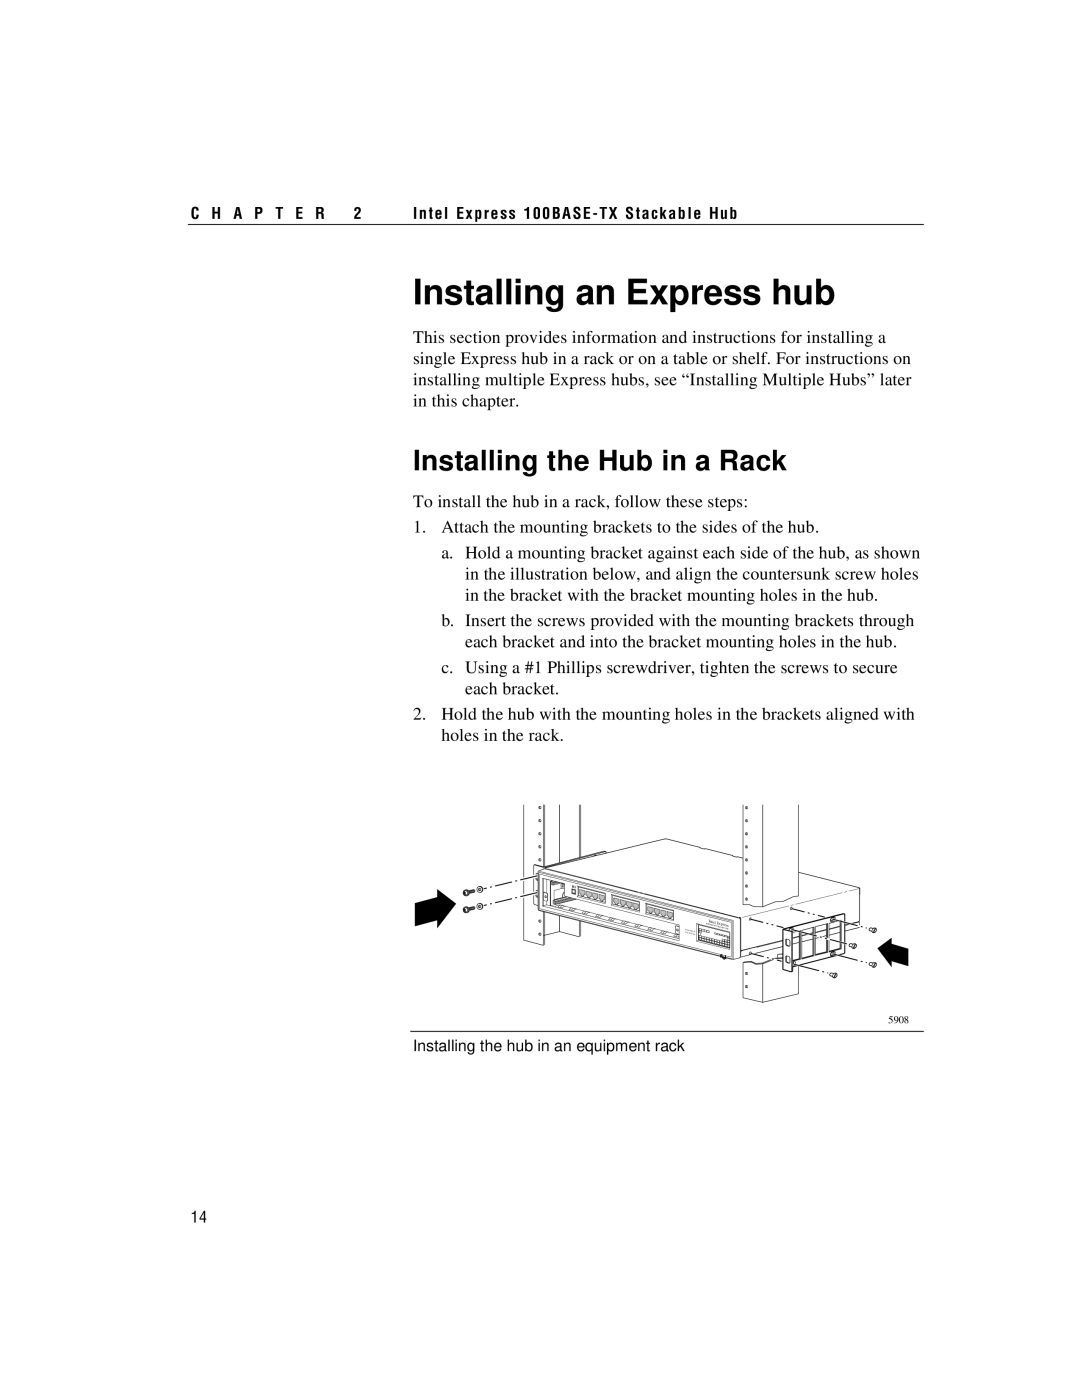 Intel 100BASE-TX manual Installing an Express hub, Installing the Hub in a Rack 